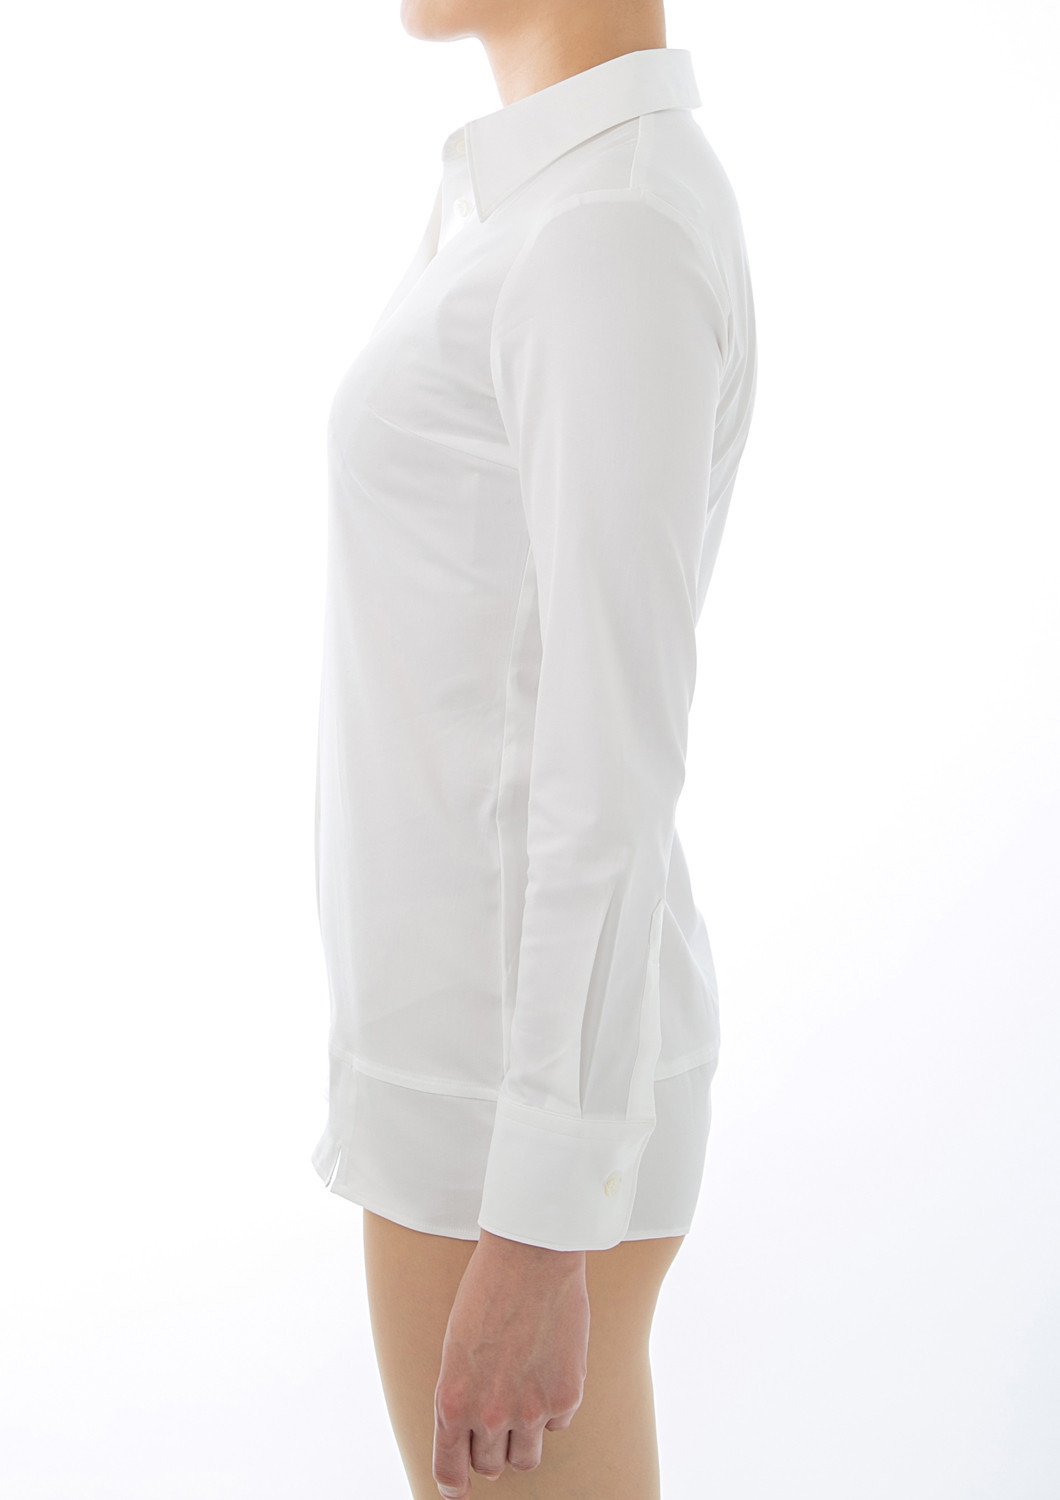 Premium Stretch Easy Care Long Sleeve Bodysuit Shirt White